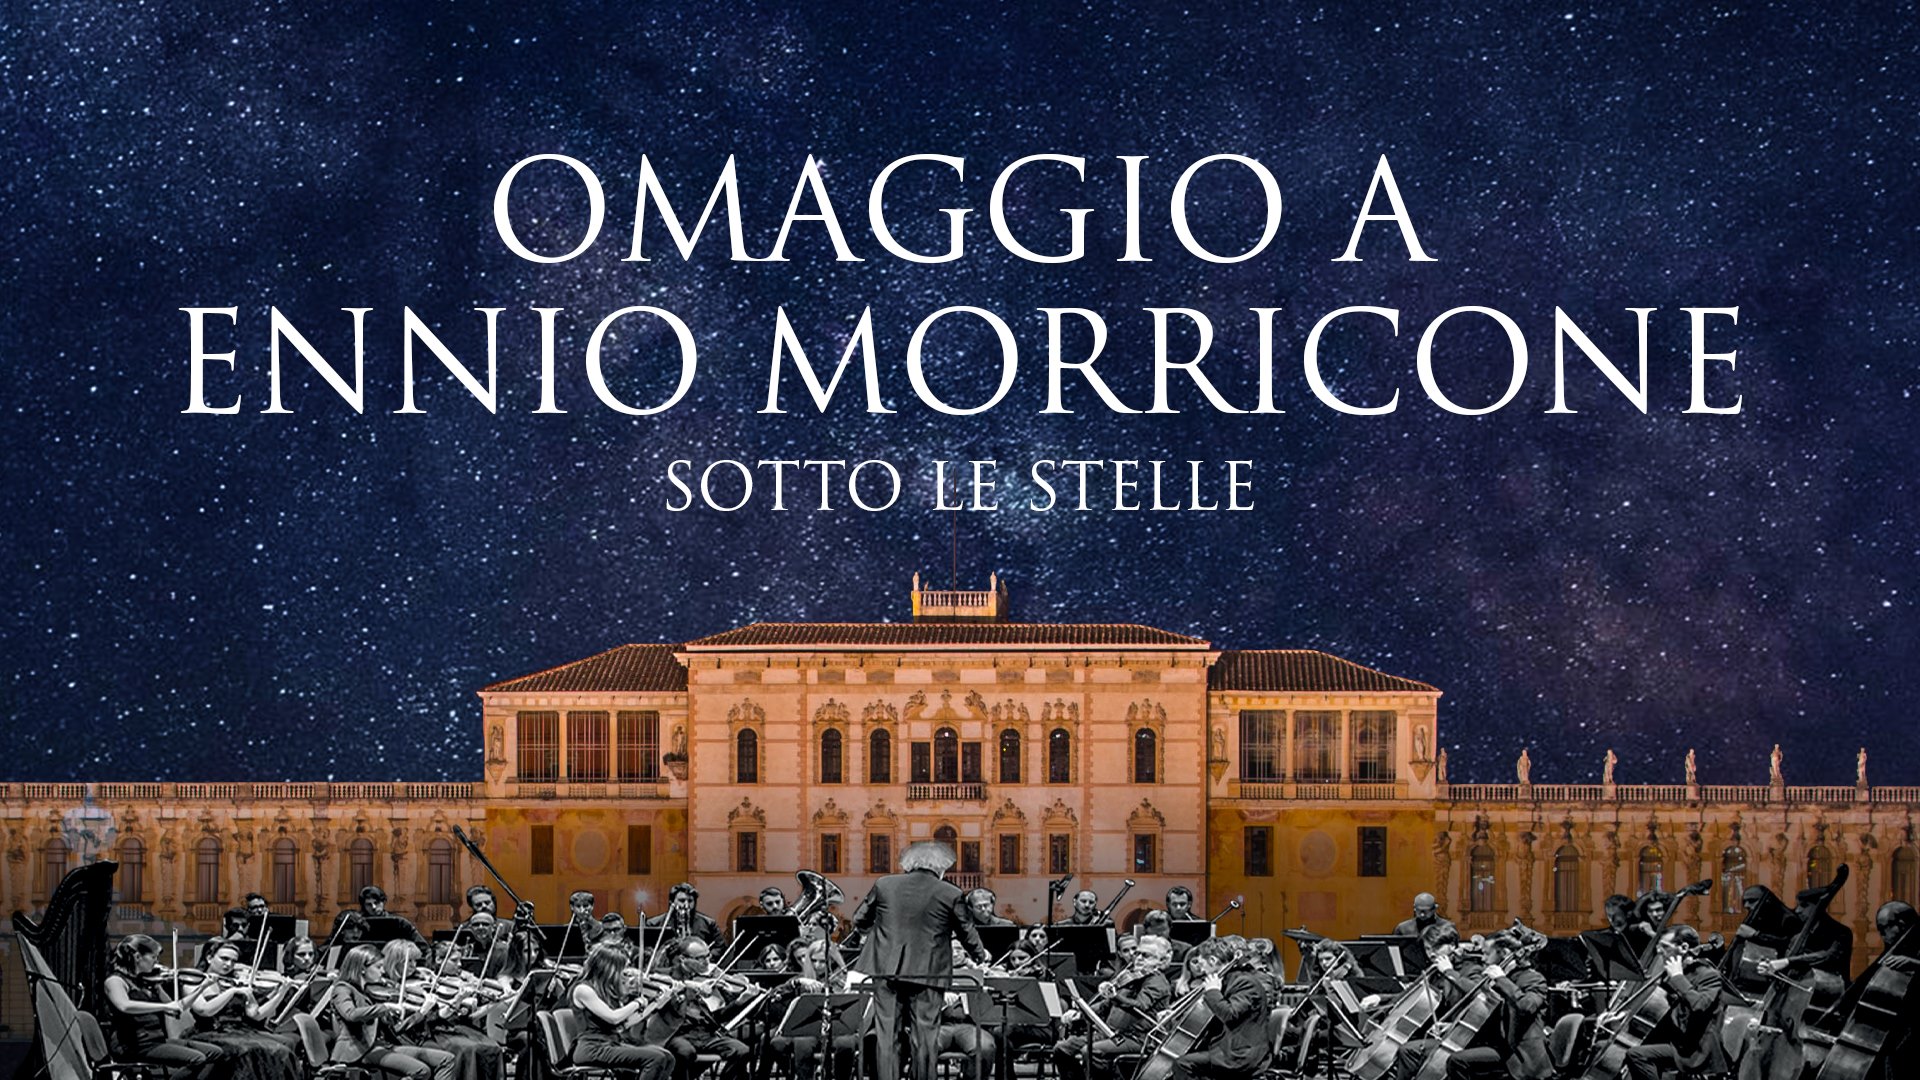 A concert for Ennio Morricone – 4th September 2020